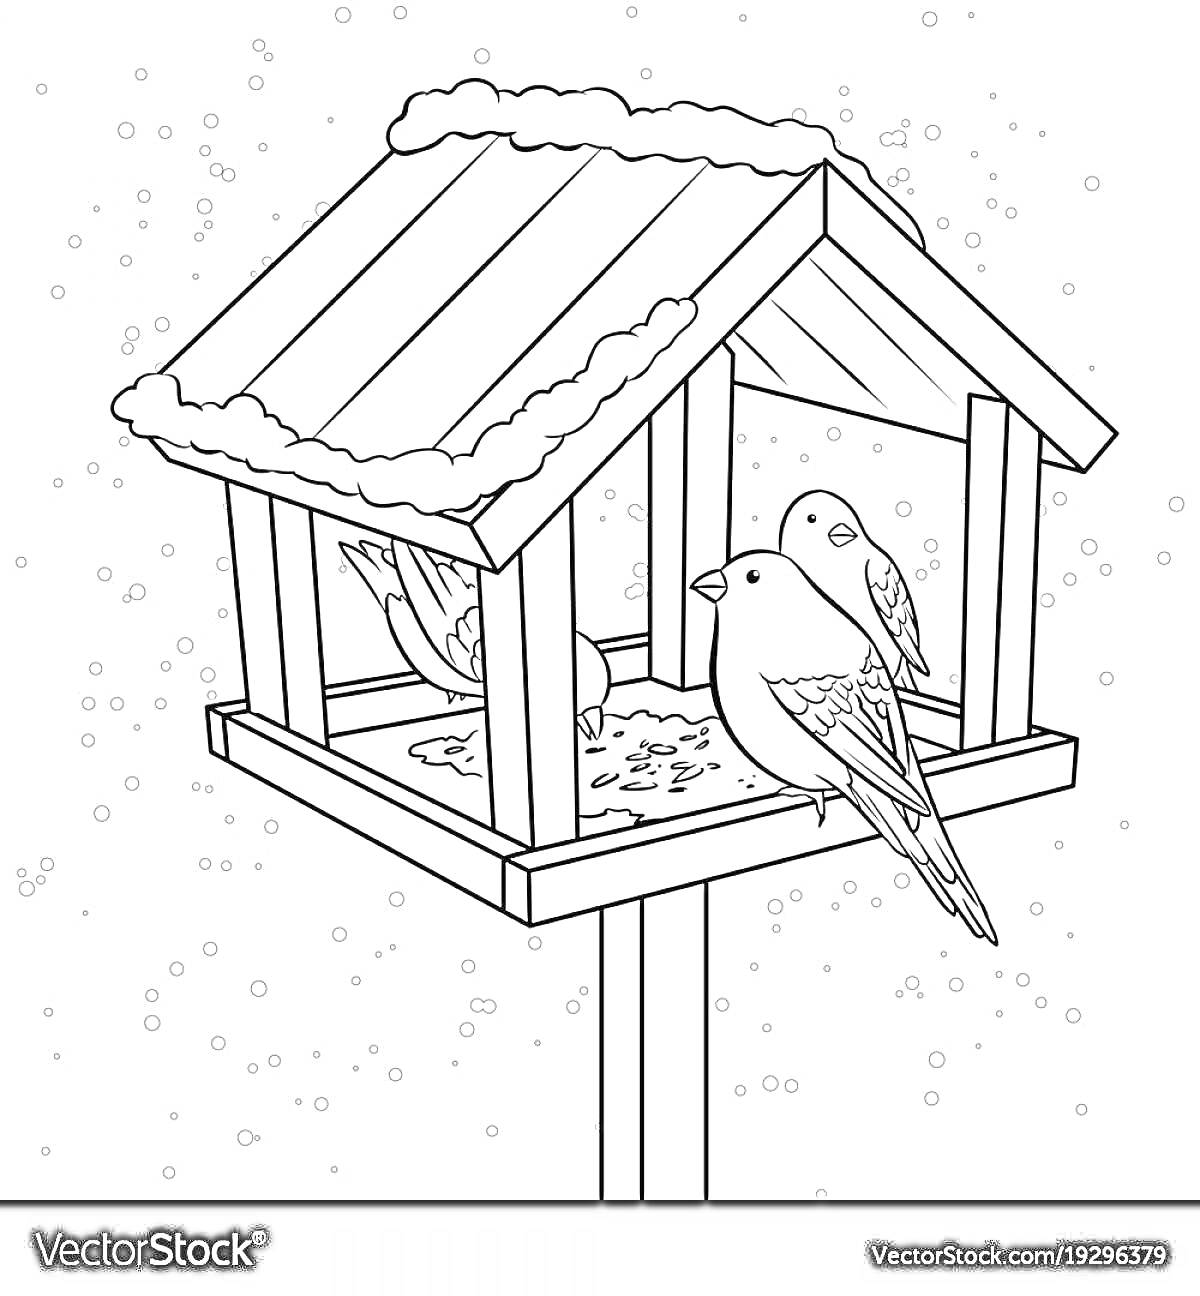 На раскраске изображено: Кормушка, Снег, Домик, Еда для птиц, Кормление птиц, Зима, Природа, Птица